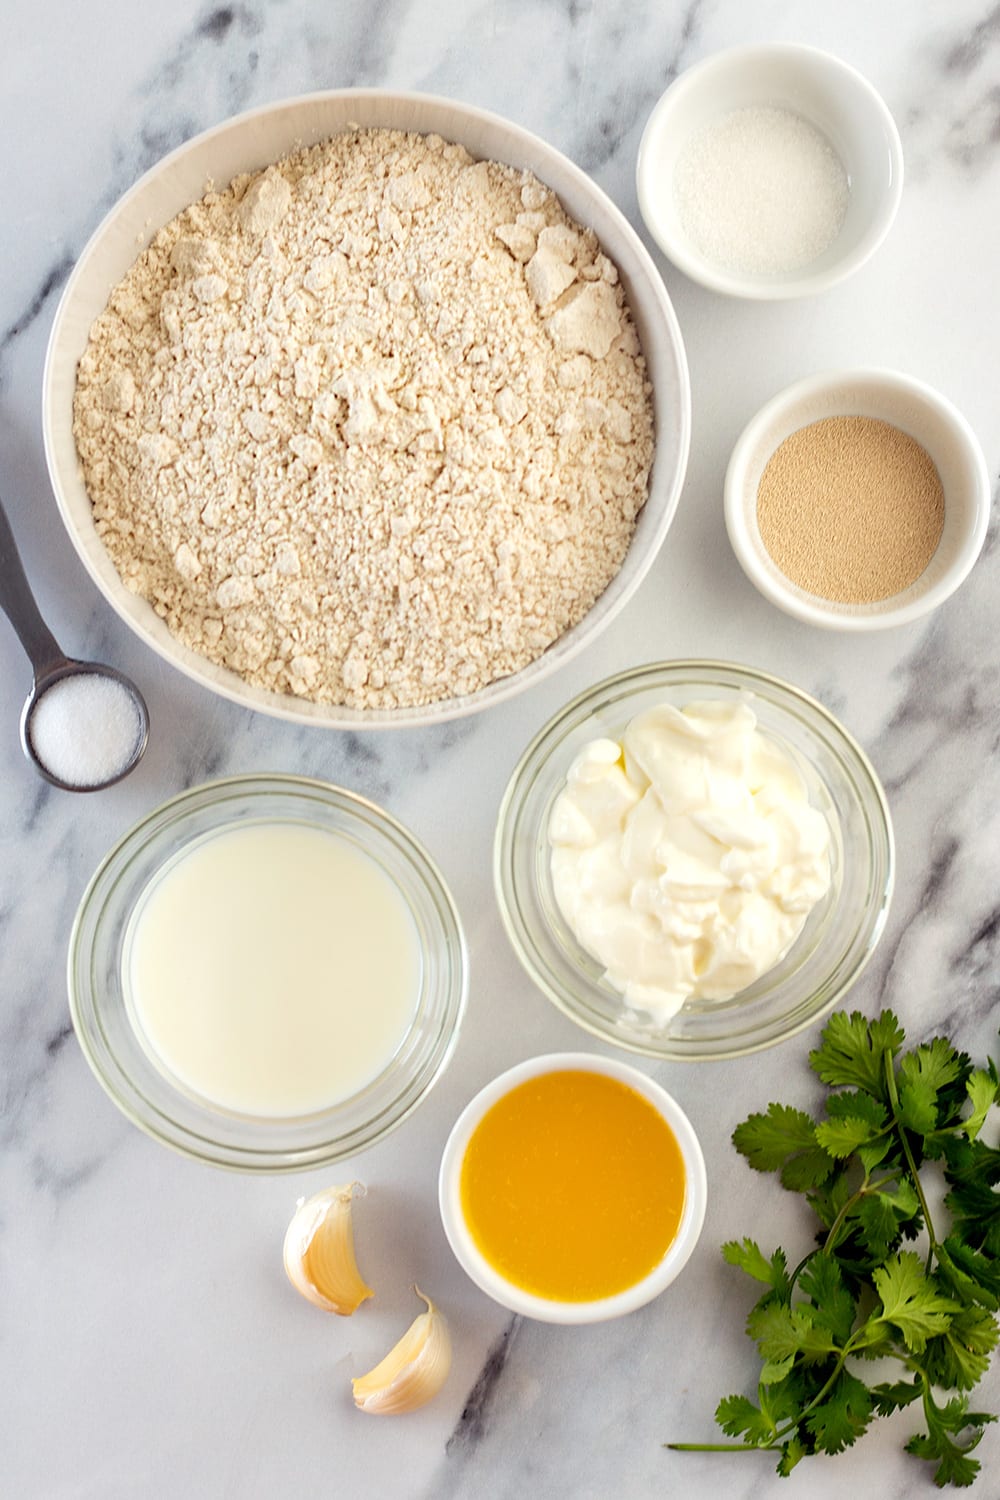 Ingredients for Garlic Naan Bread